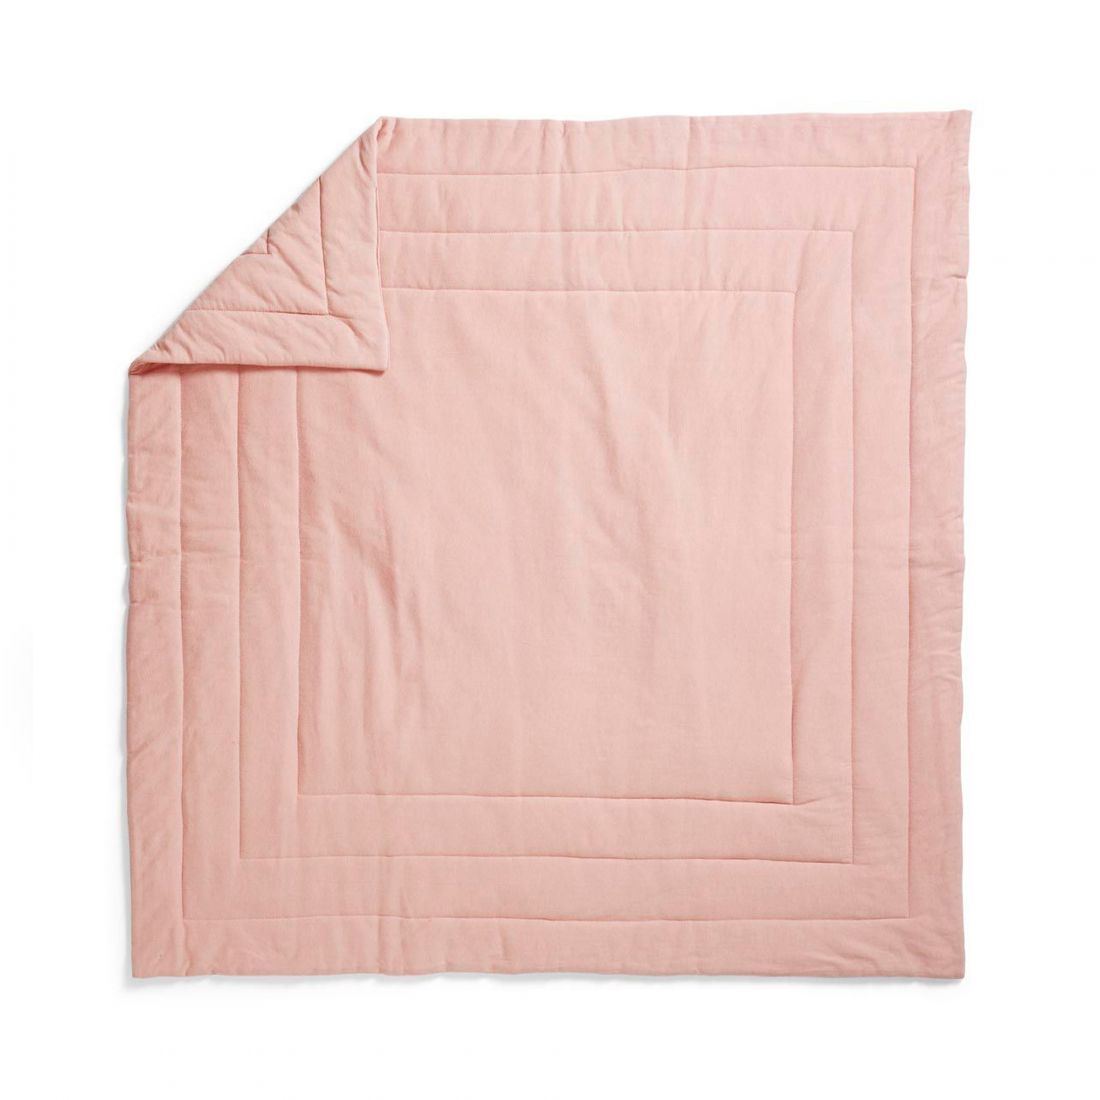 Elodie Quilted Blanket Blushing Pink
